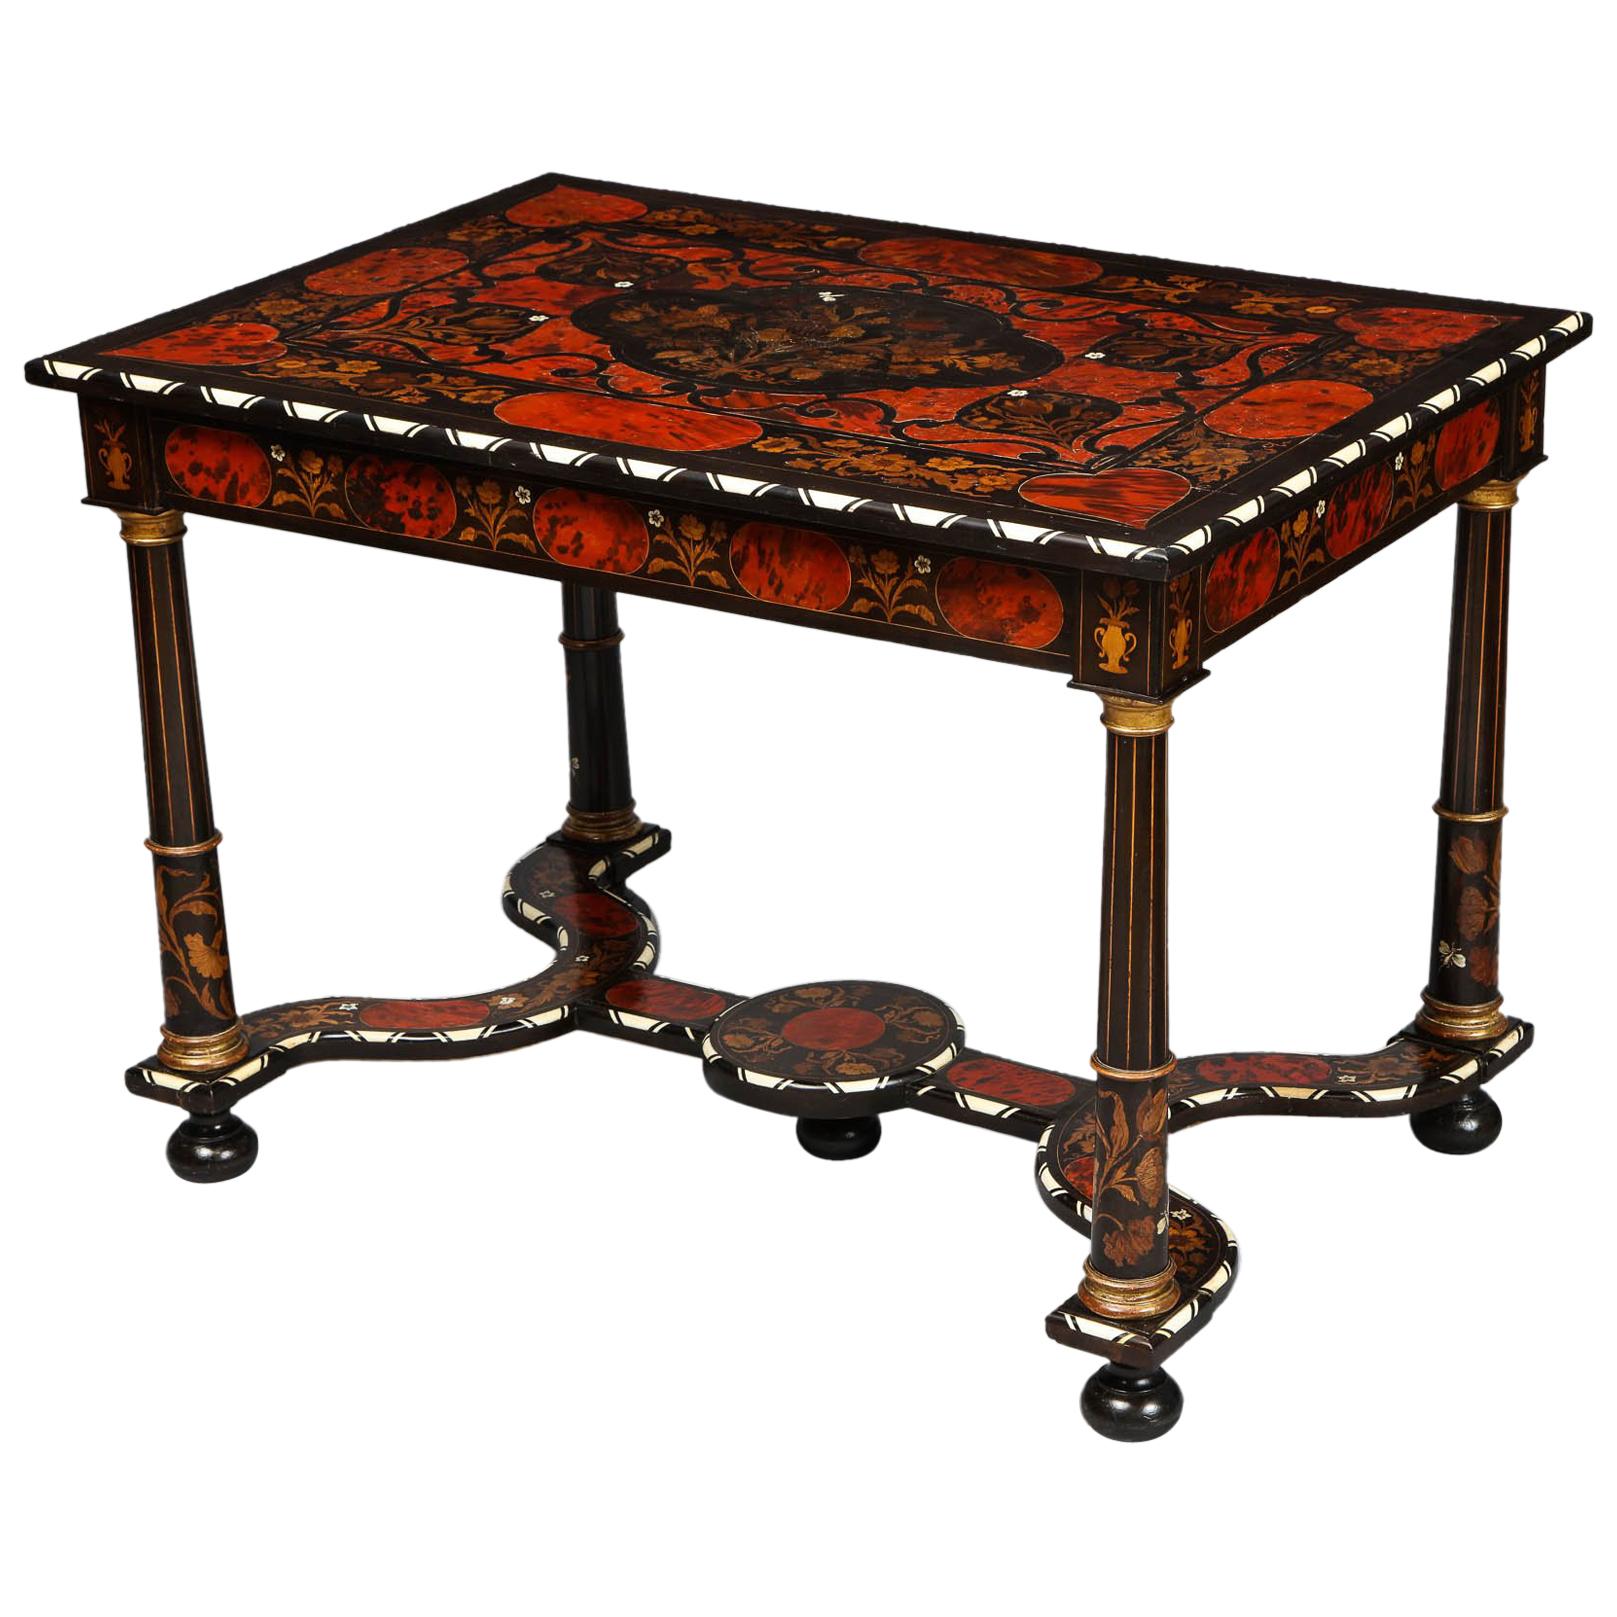 Table décorée de marqueterie baroque flamande